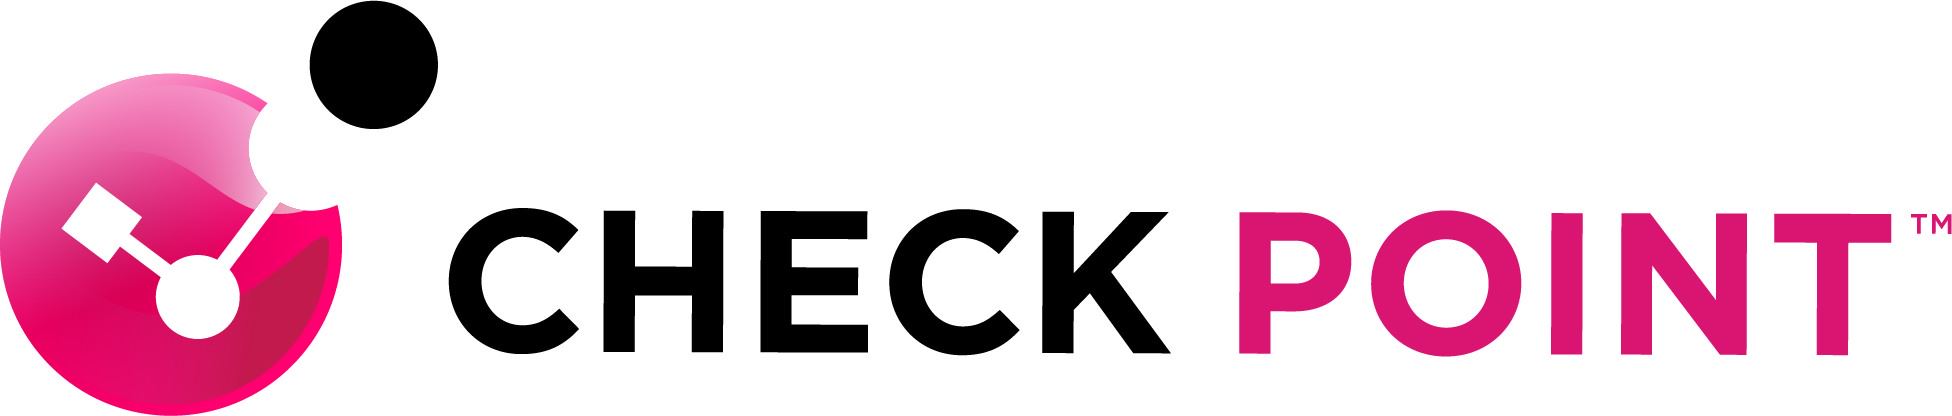 checkpoint-logo.jpeg